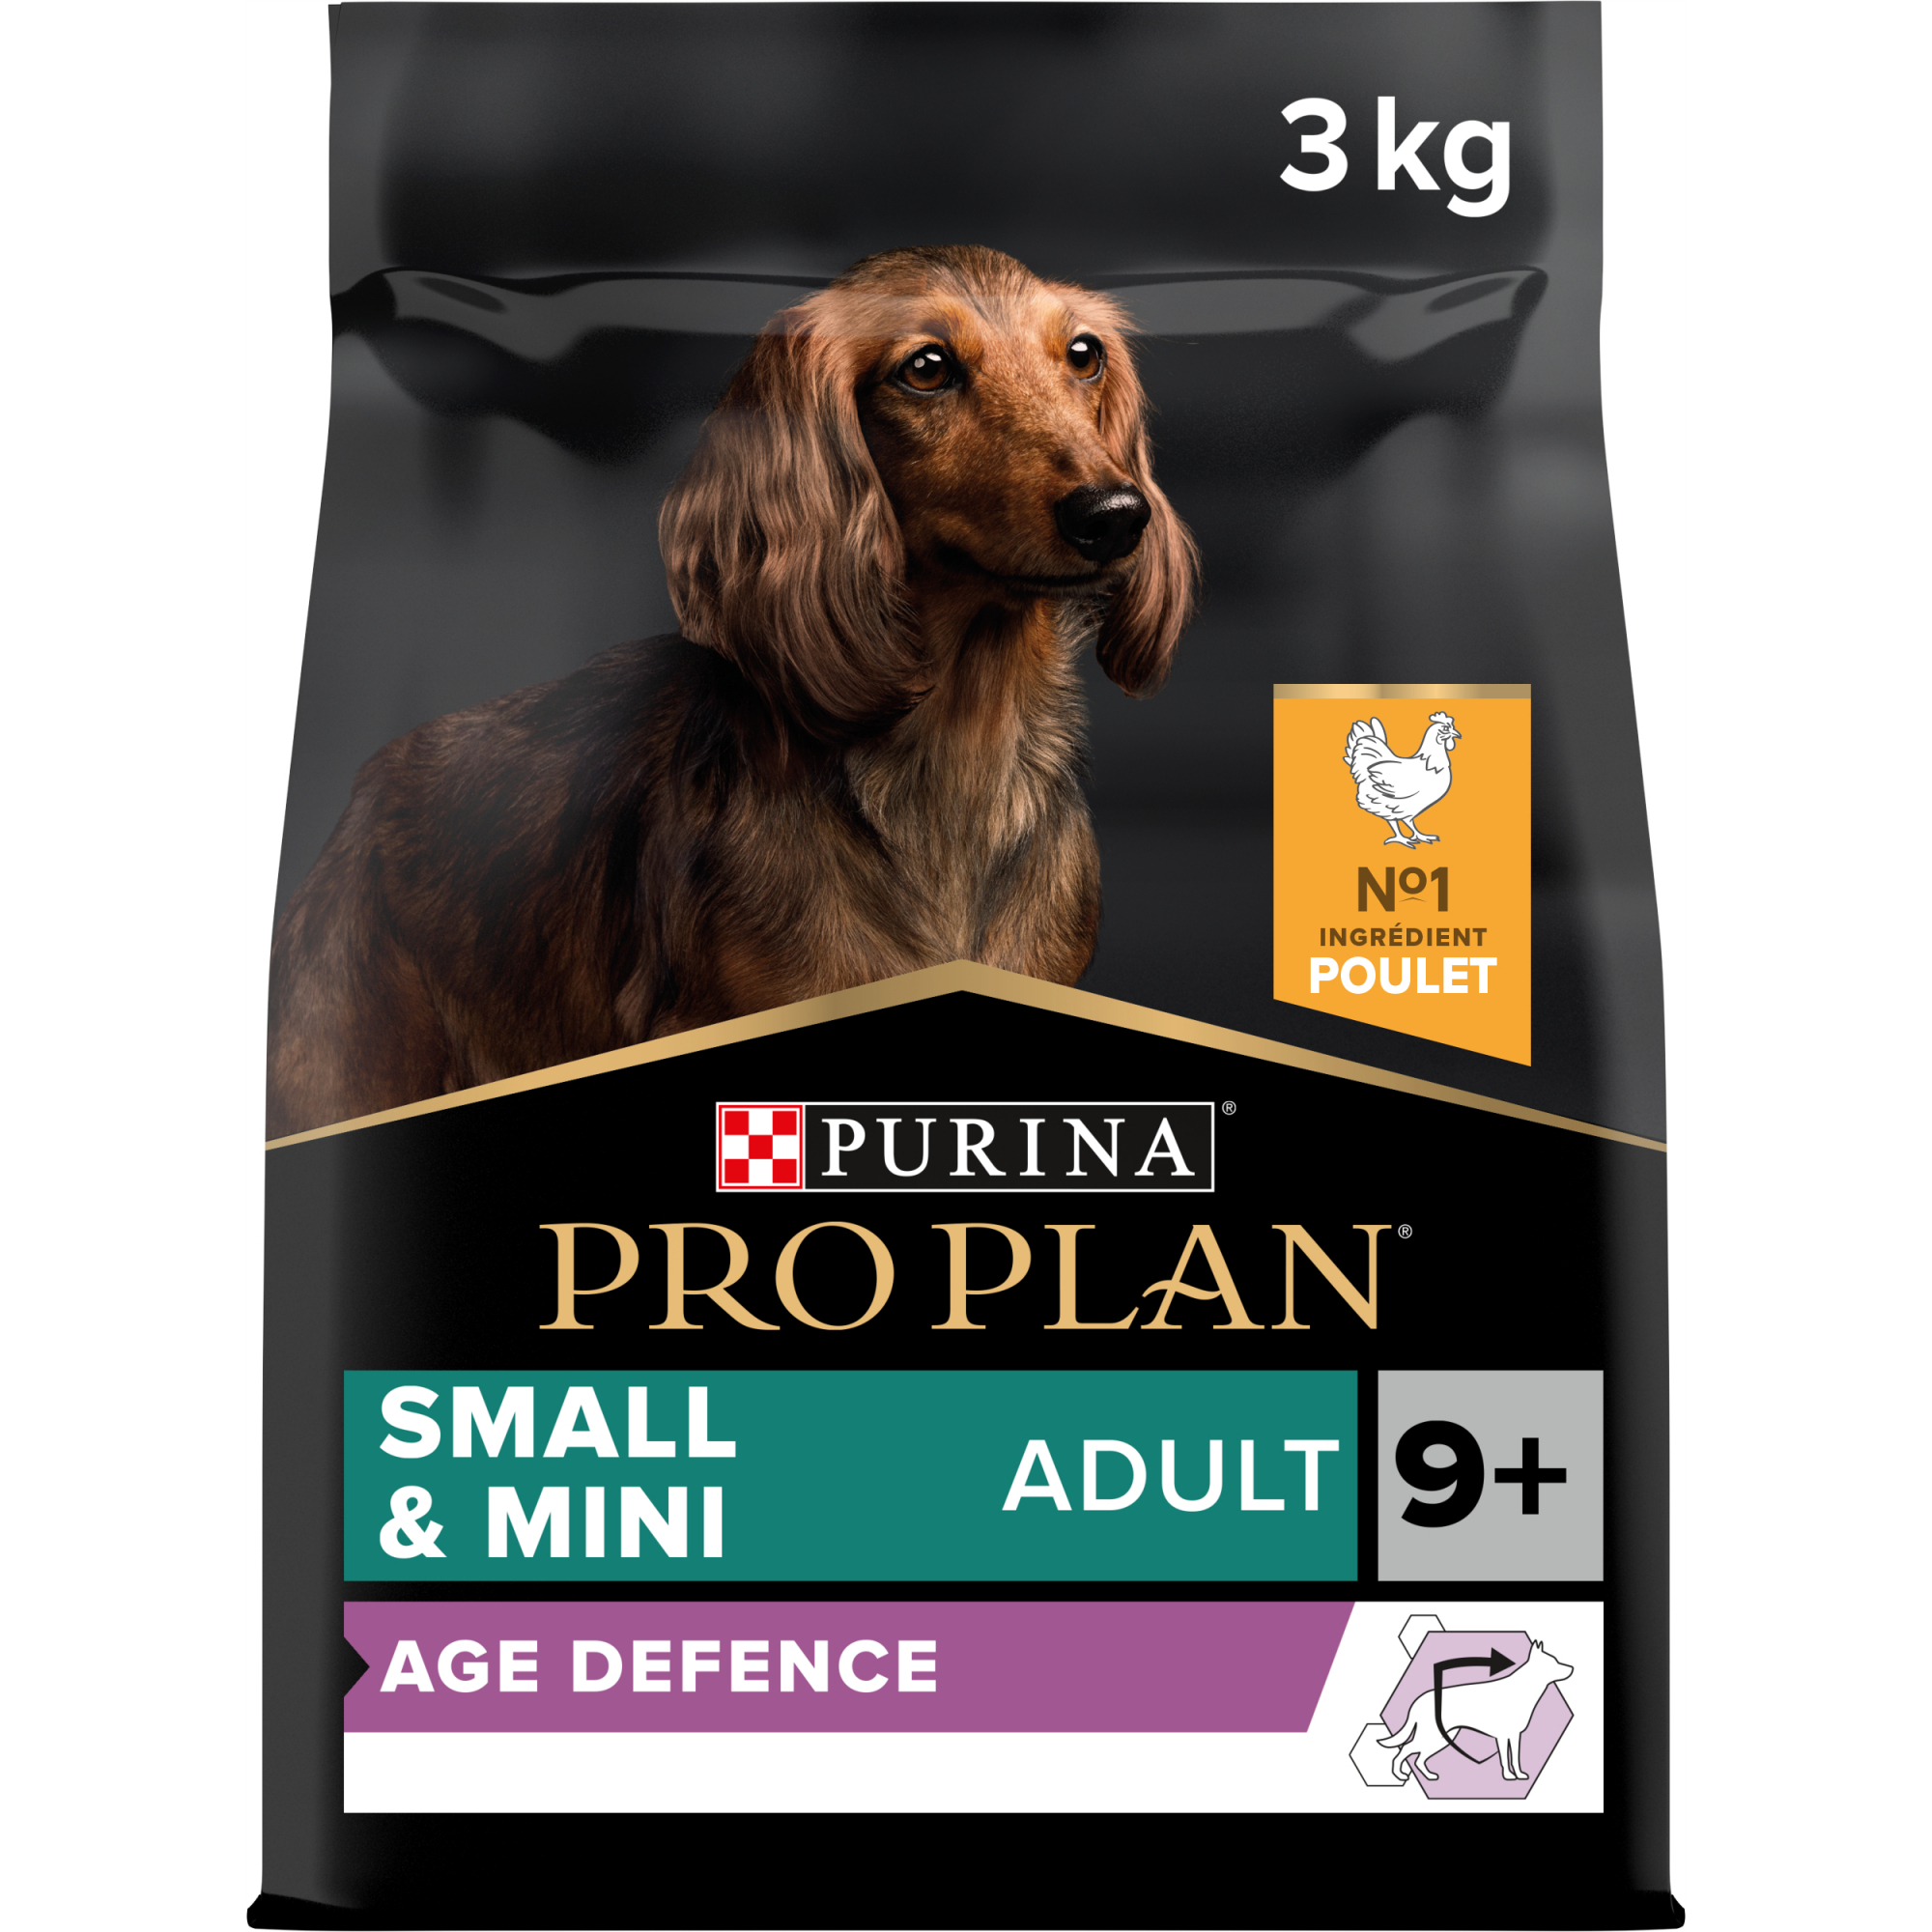 PRO PLAN Small & Mini Adult 9+ für Hunde